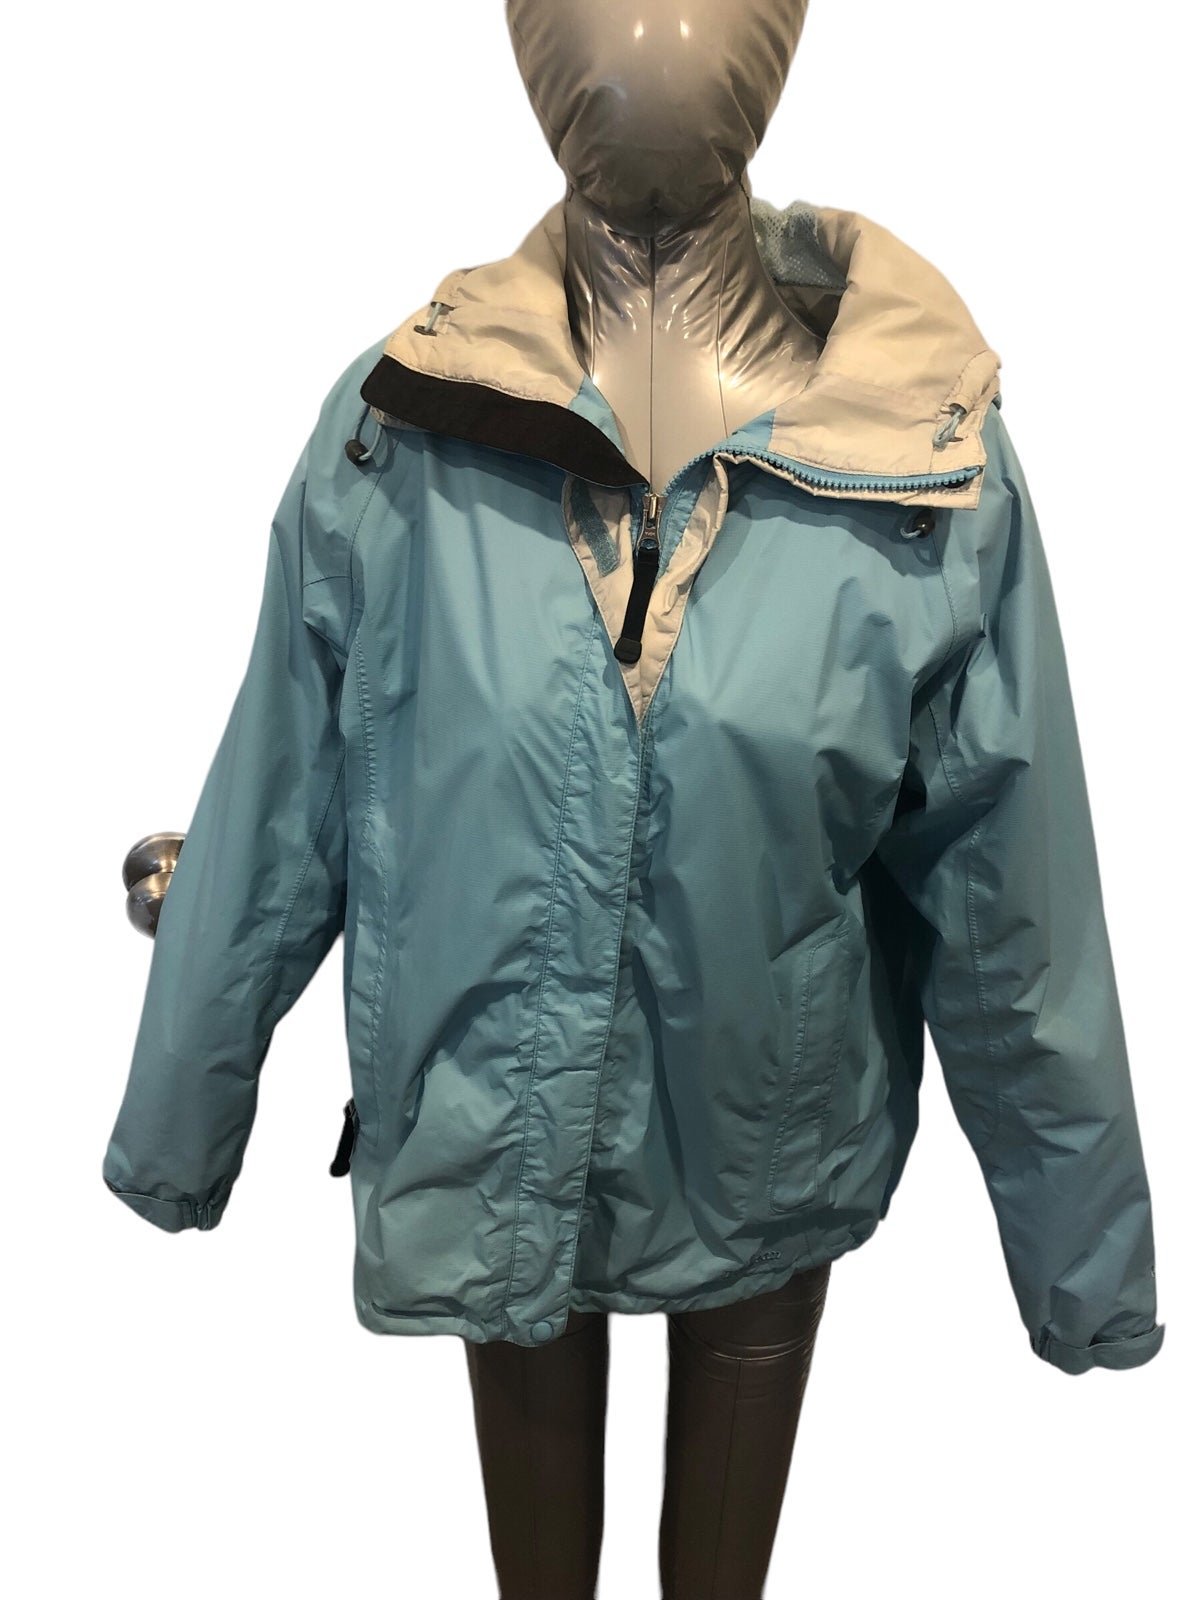 Affordable L.L.Bean Women’s Small light blue jacket outerwear iZuyuI0Qe Cheap